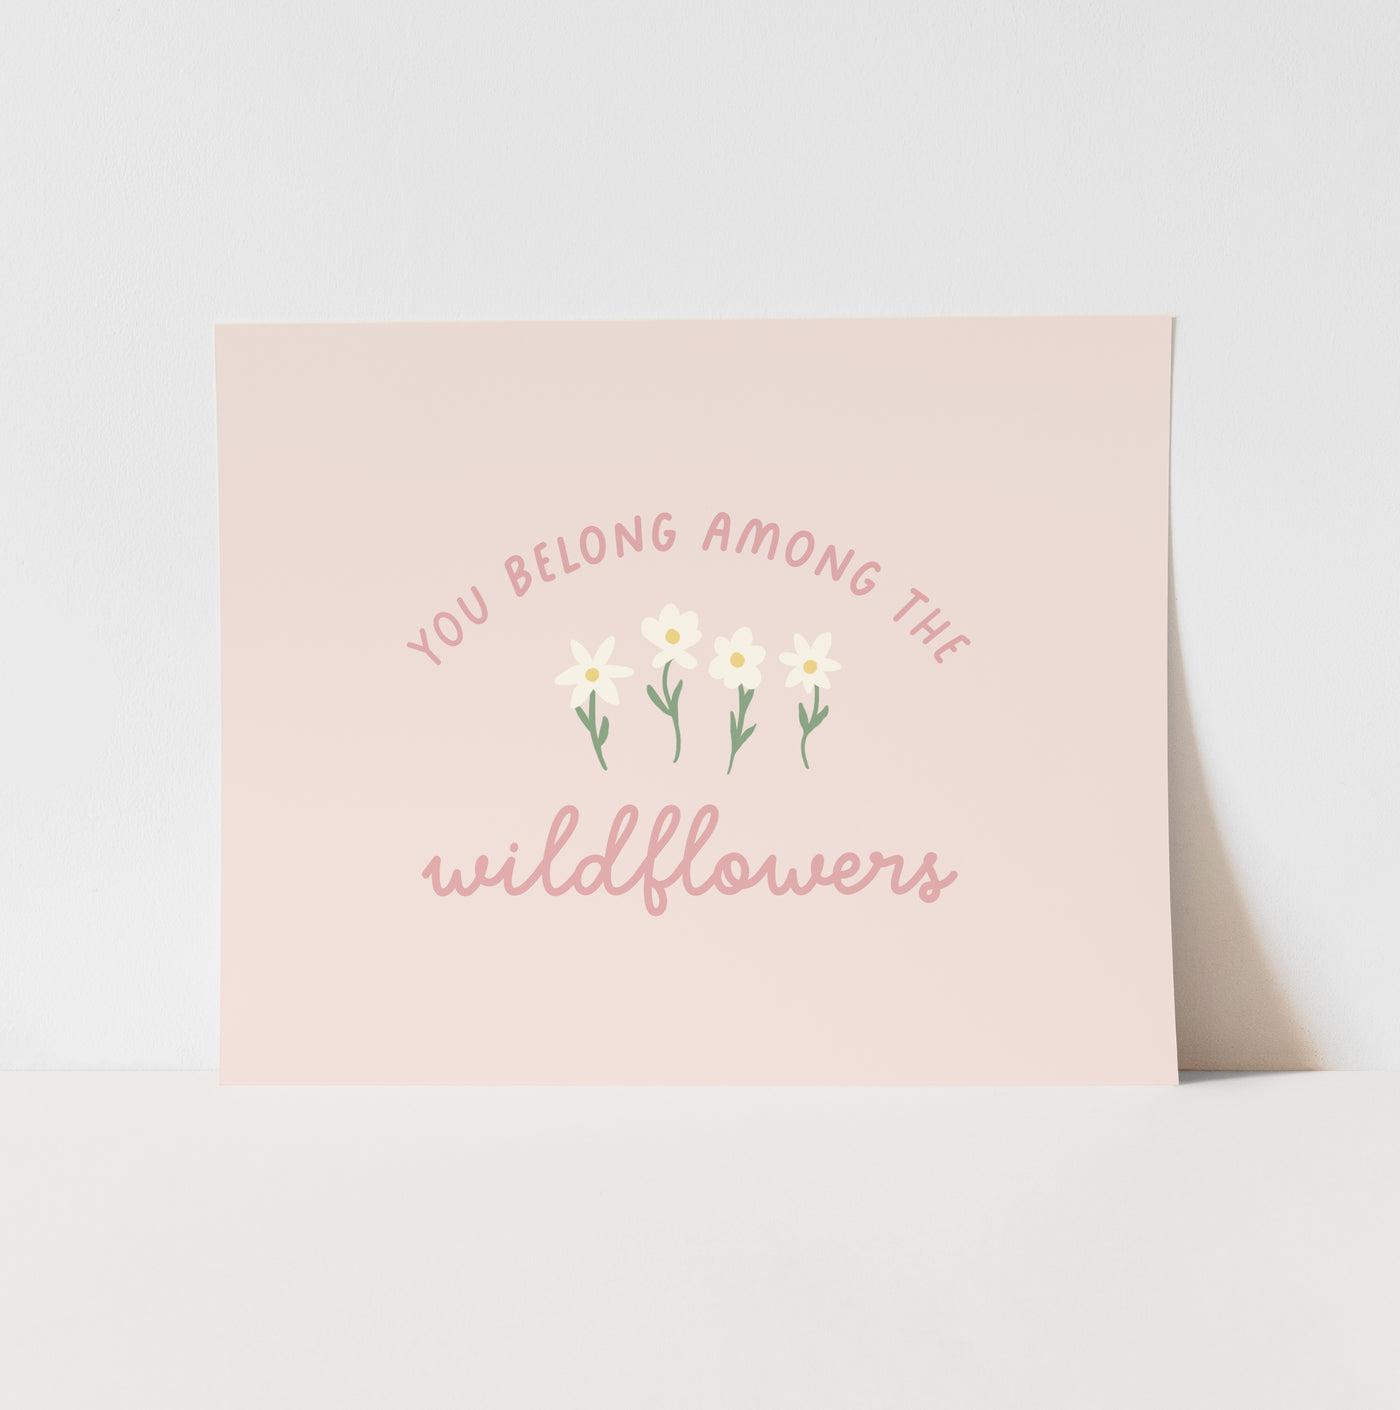 Art Print: You Belong Among the Wildflowers